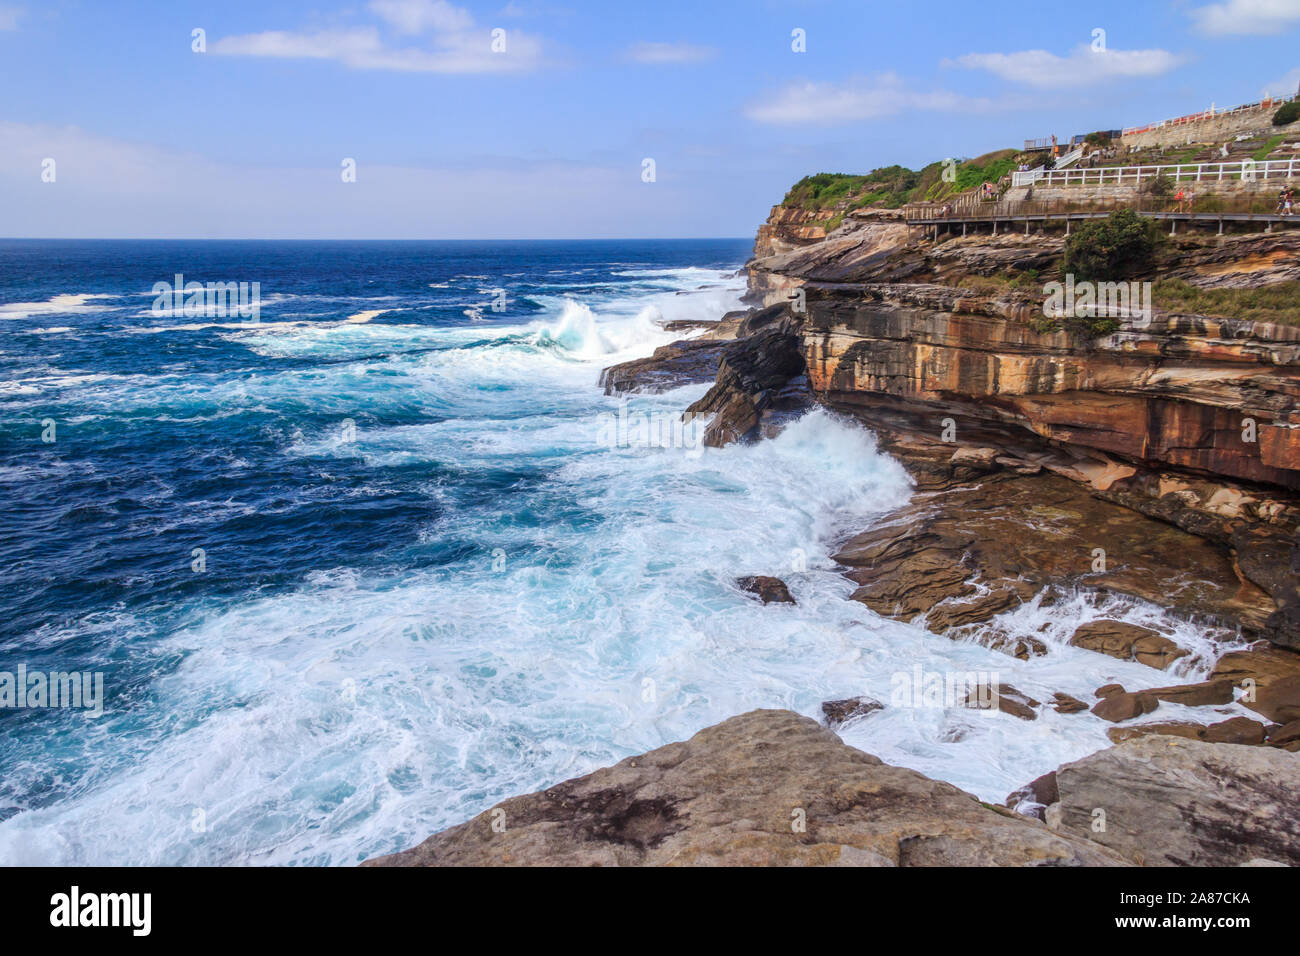 El mar embravecido por Waverley en Coogee a Bondi caminata costera, Sydney, New South Wales, Australia Foto de stock